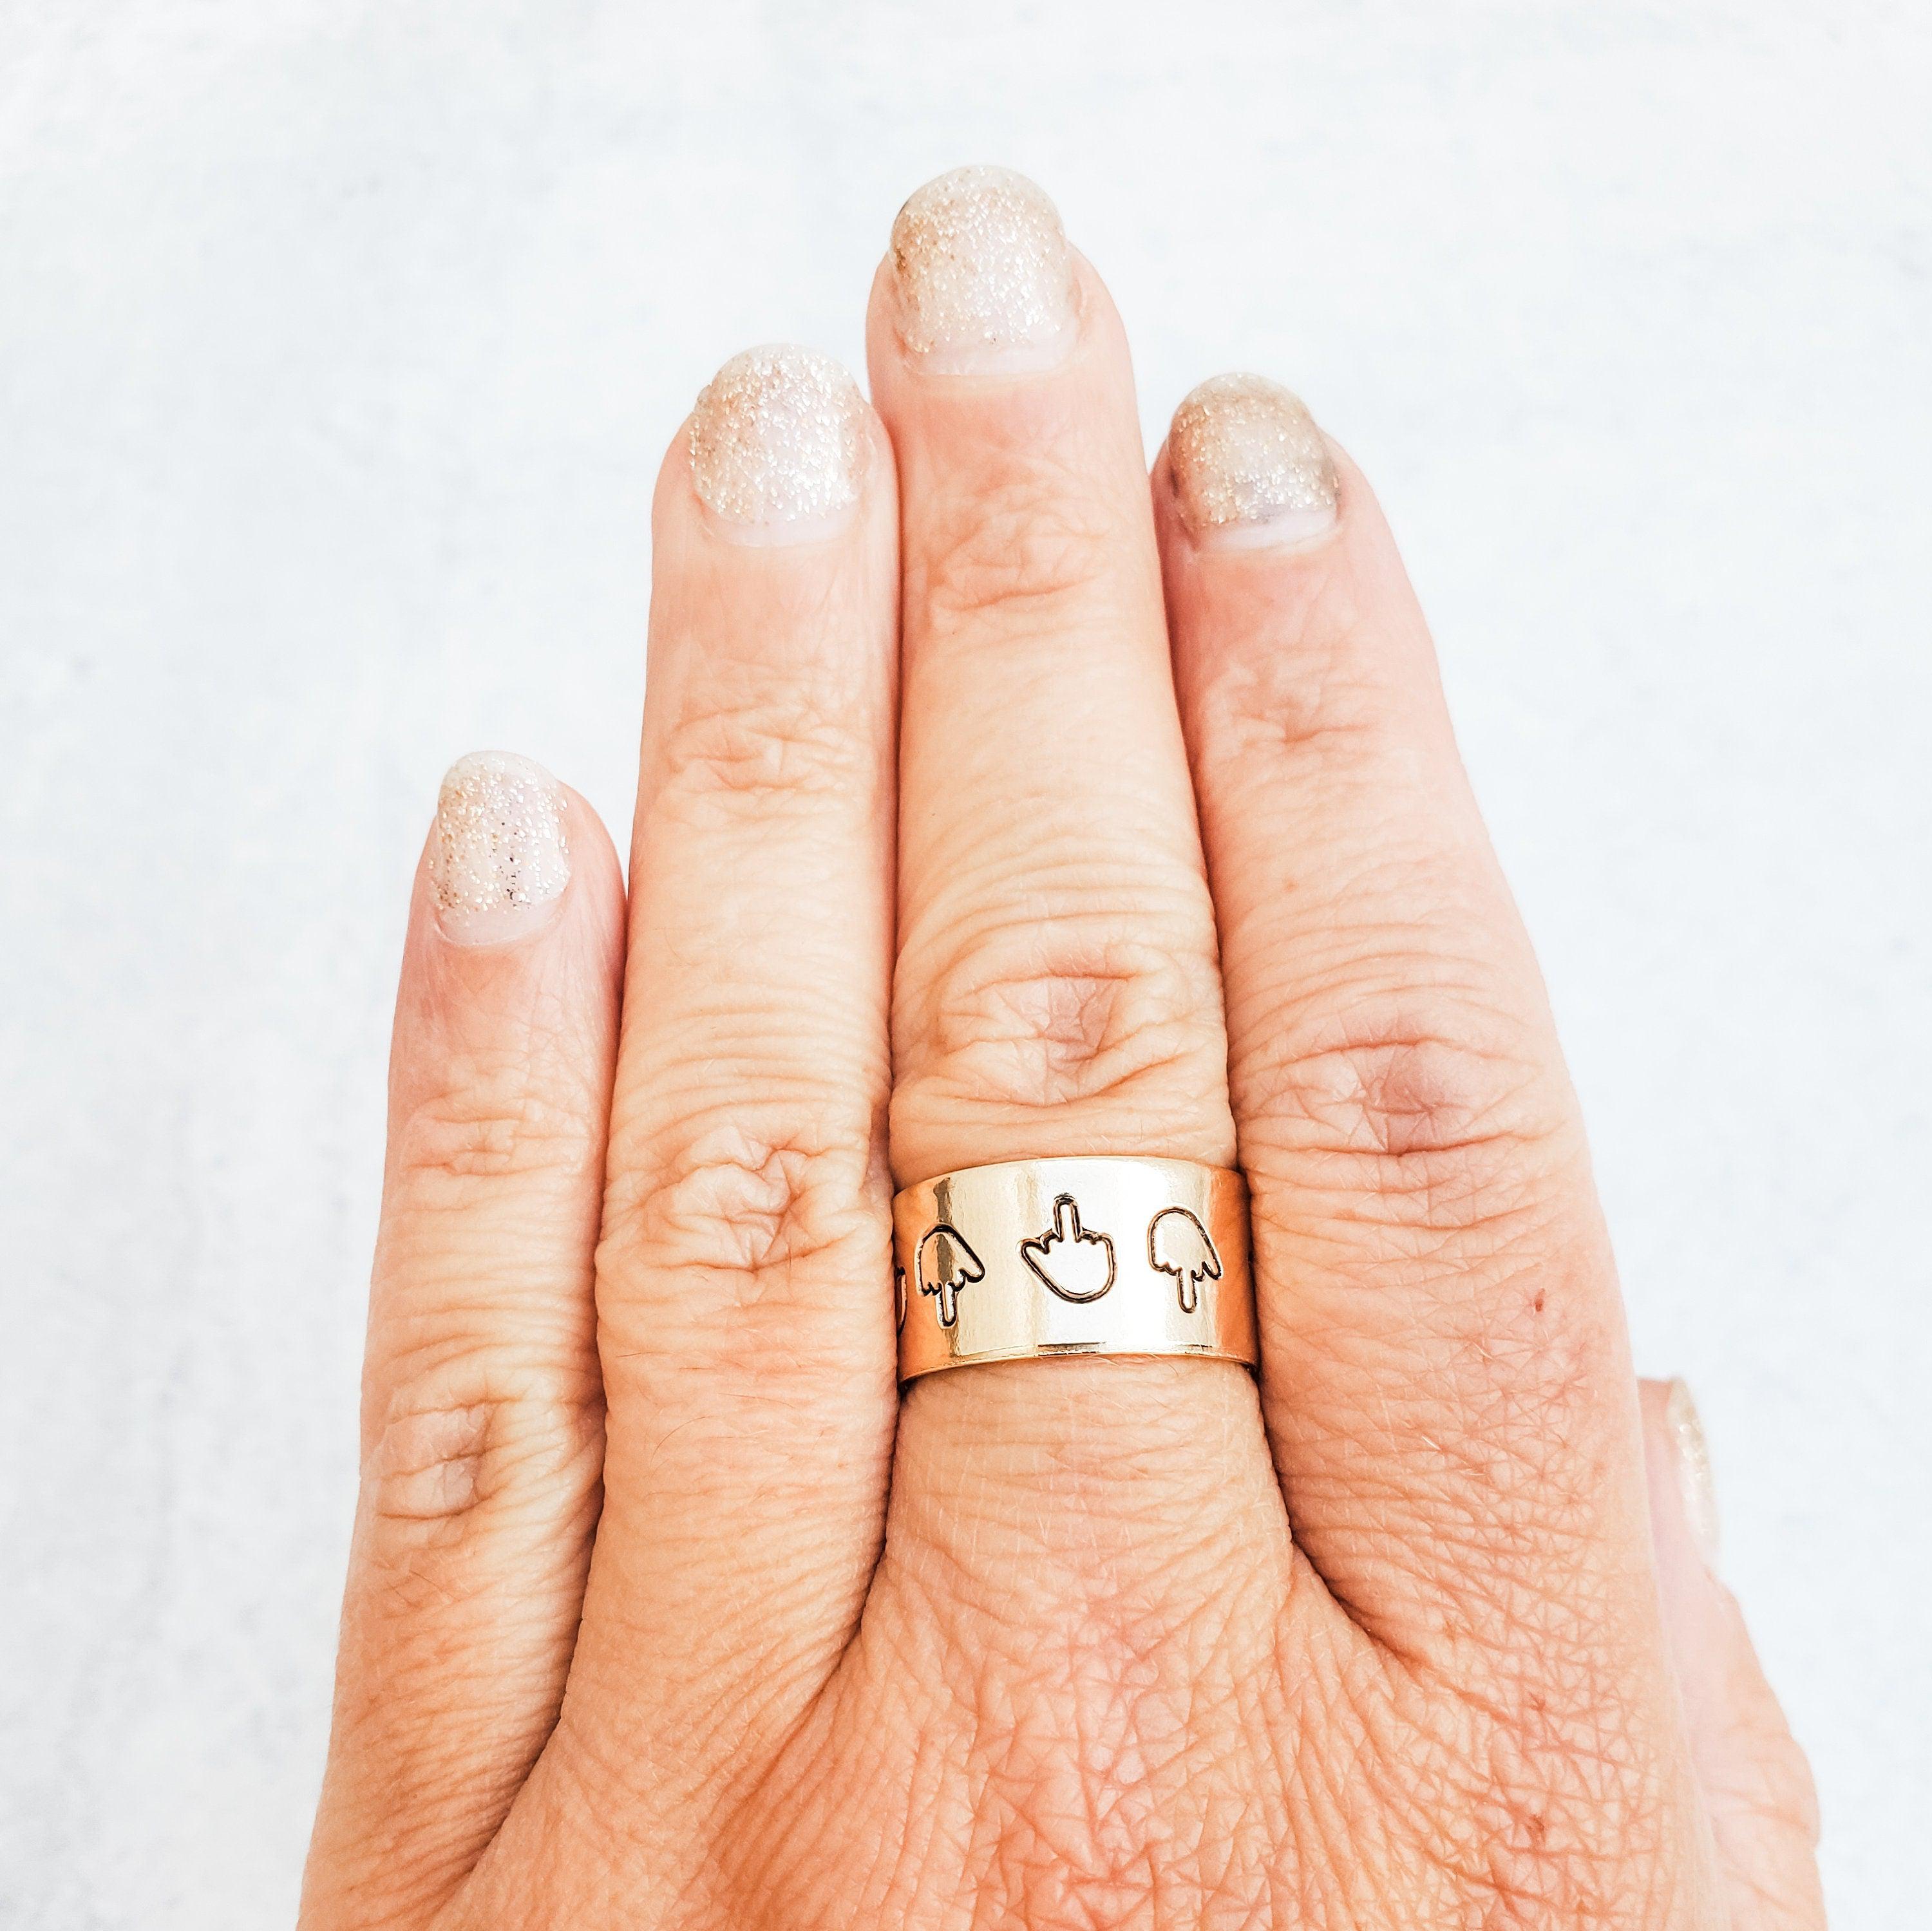 Gold Middle Finger Ring - 14k Gold Filled Middle Finger Tiktok Ring - FU Gag Gift - Gender Neutral Gold Ring - Matching Funny F*ck You Ring